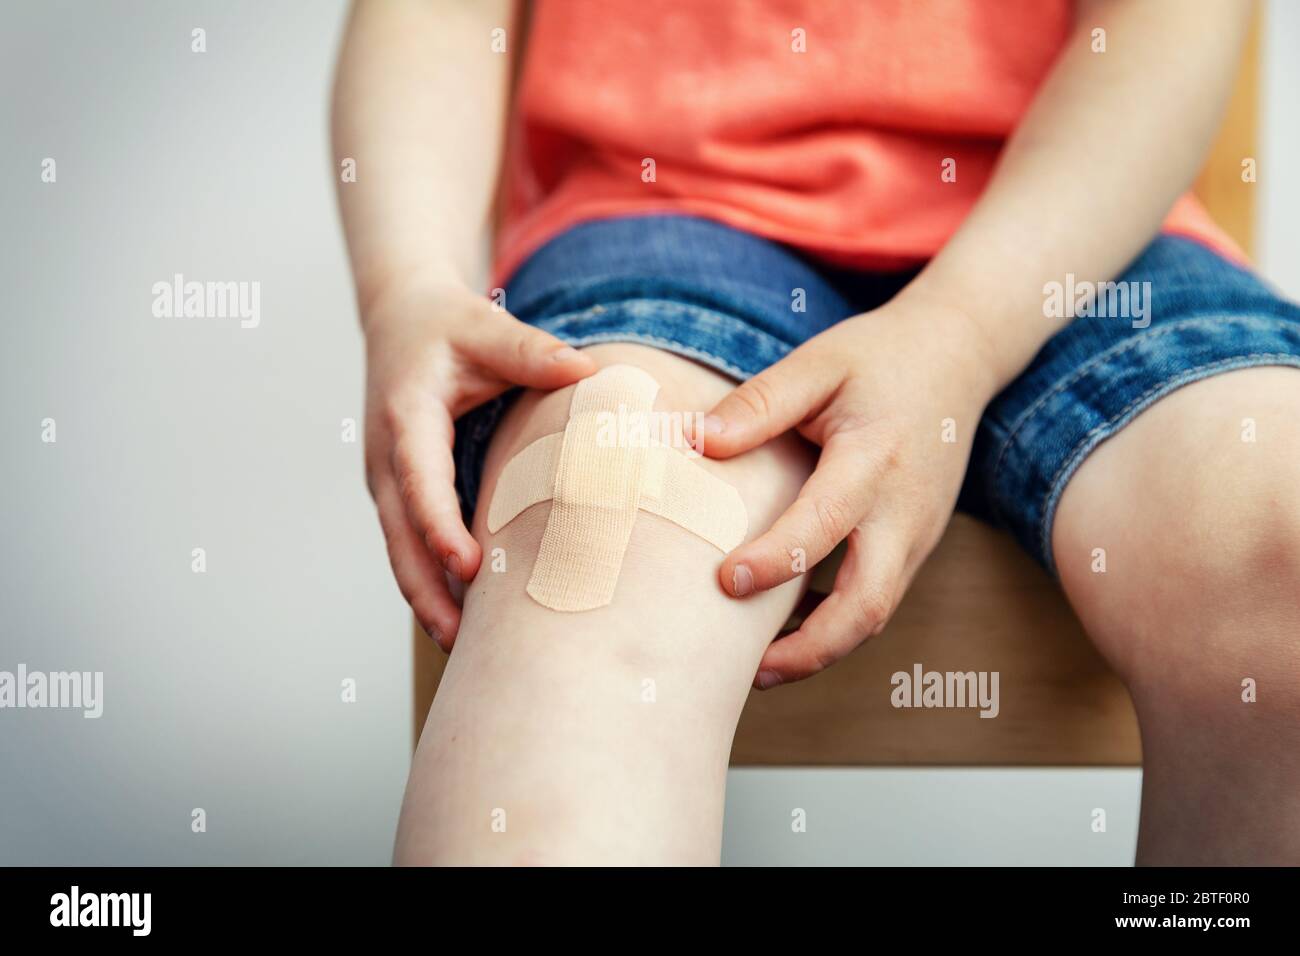 child knee with adhesive medical plaster strip bandage Stock Photo